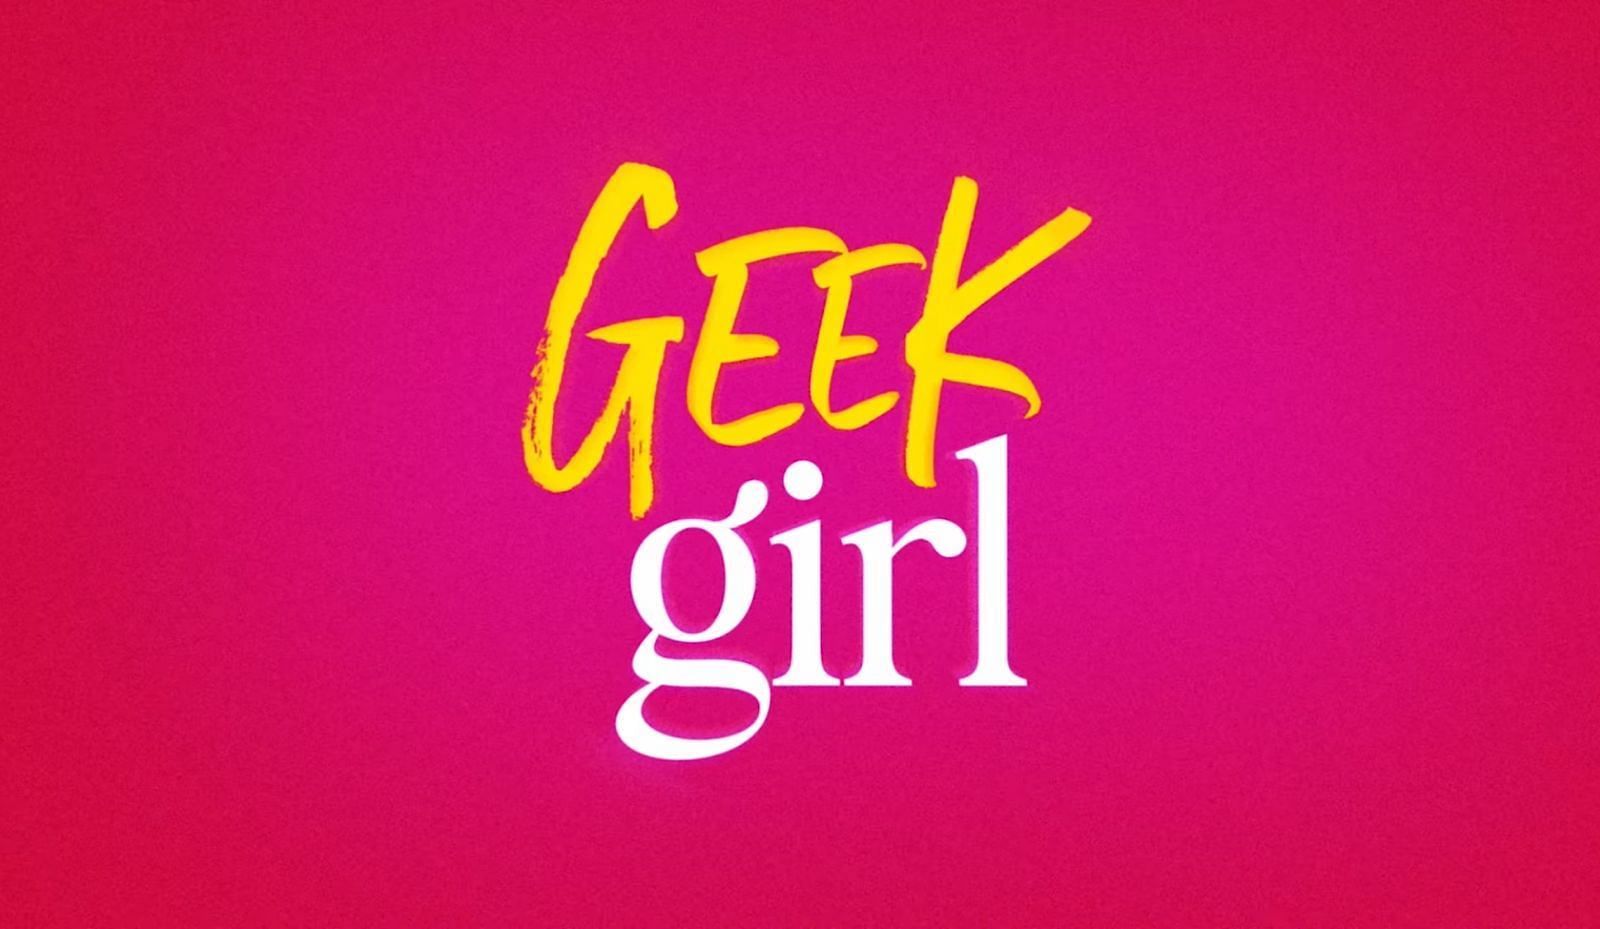 Geek Girl is coming on Netflix (Image by Netflix)